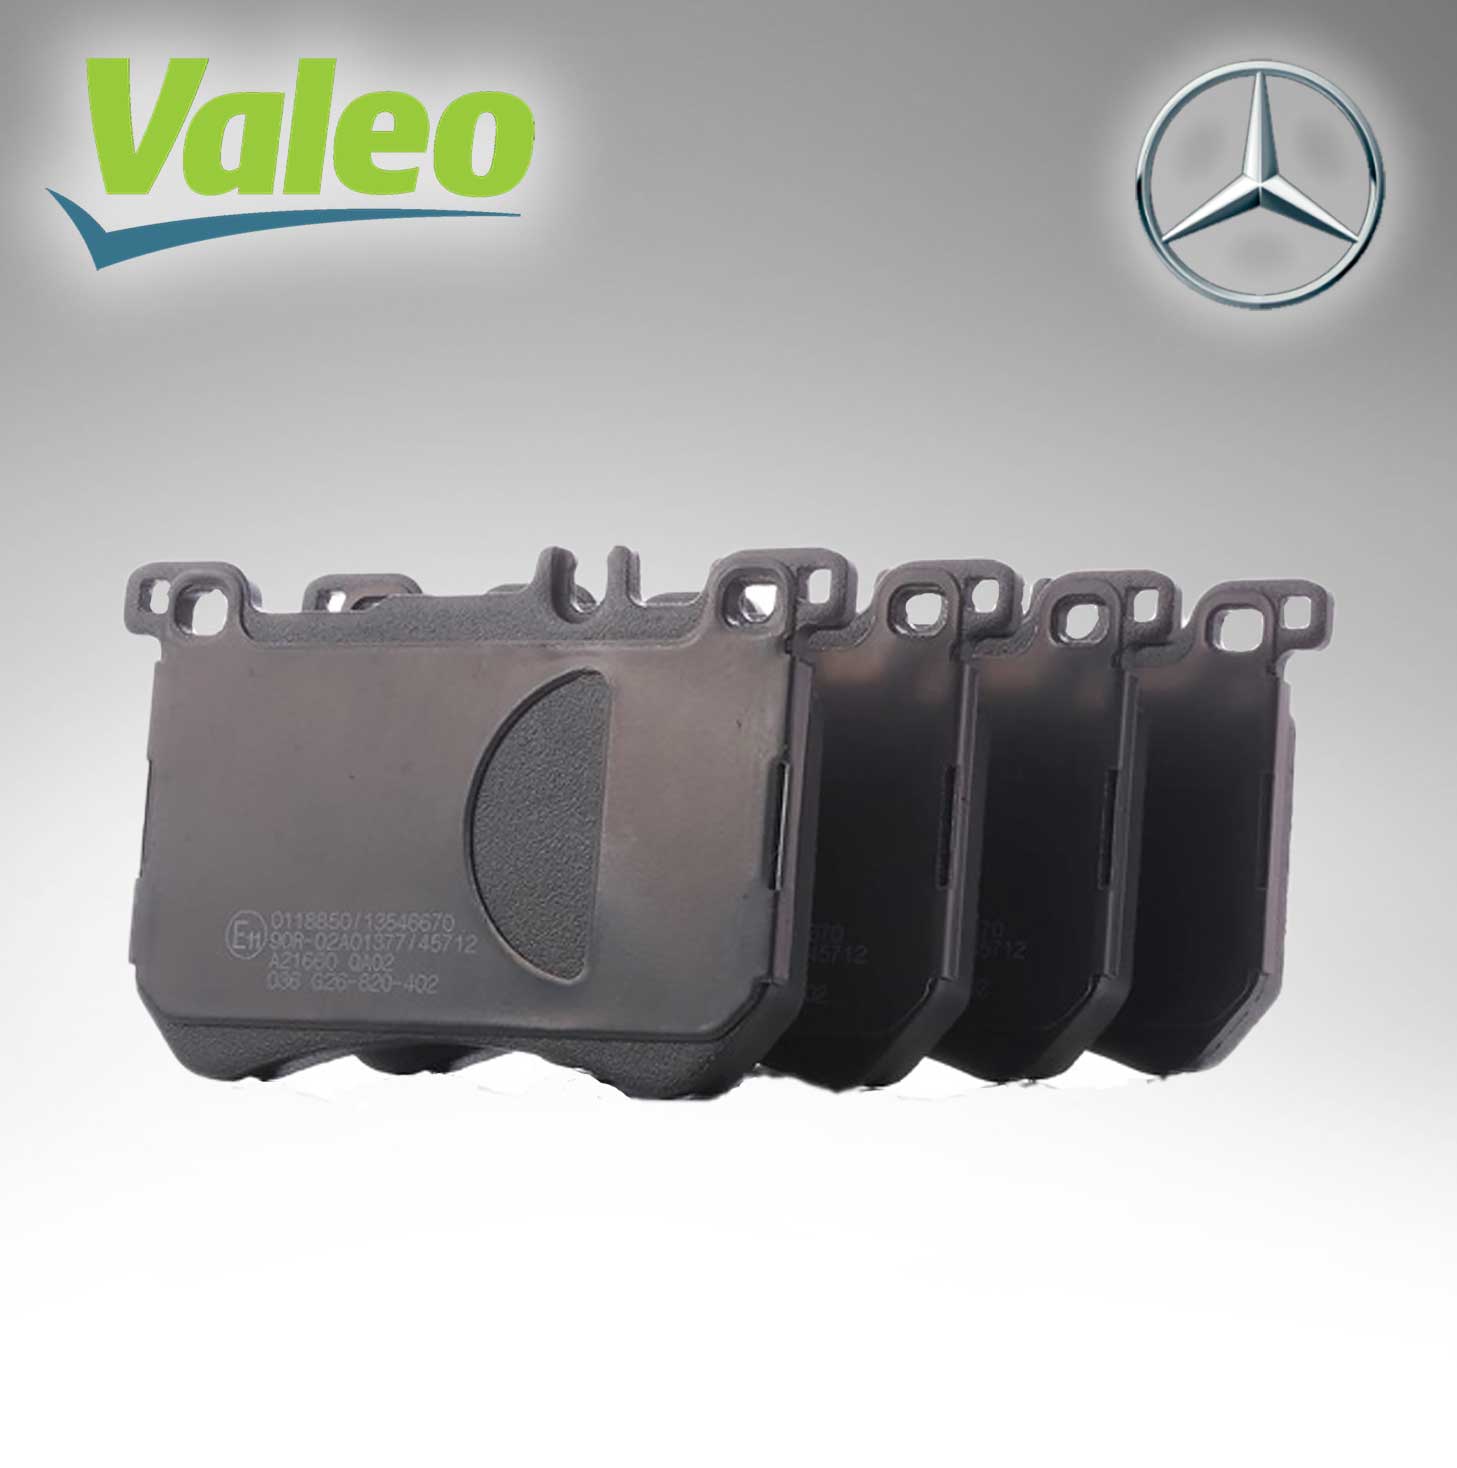 Valeo BRAKE PADS MERCEDES S- SERIES W222 (Val#671538) For Mercedes Benz 0084203520